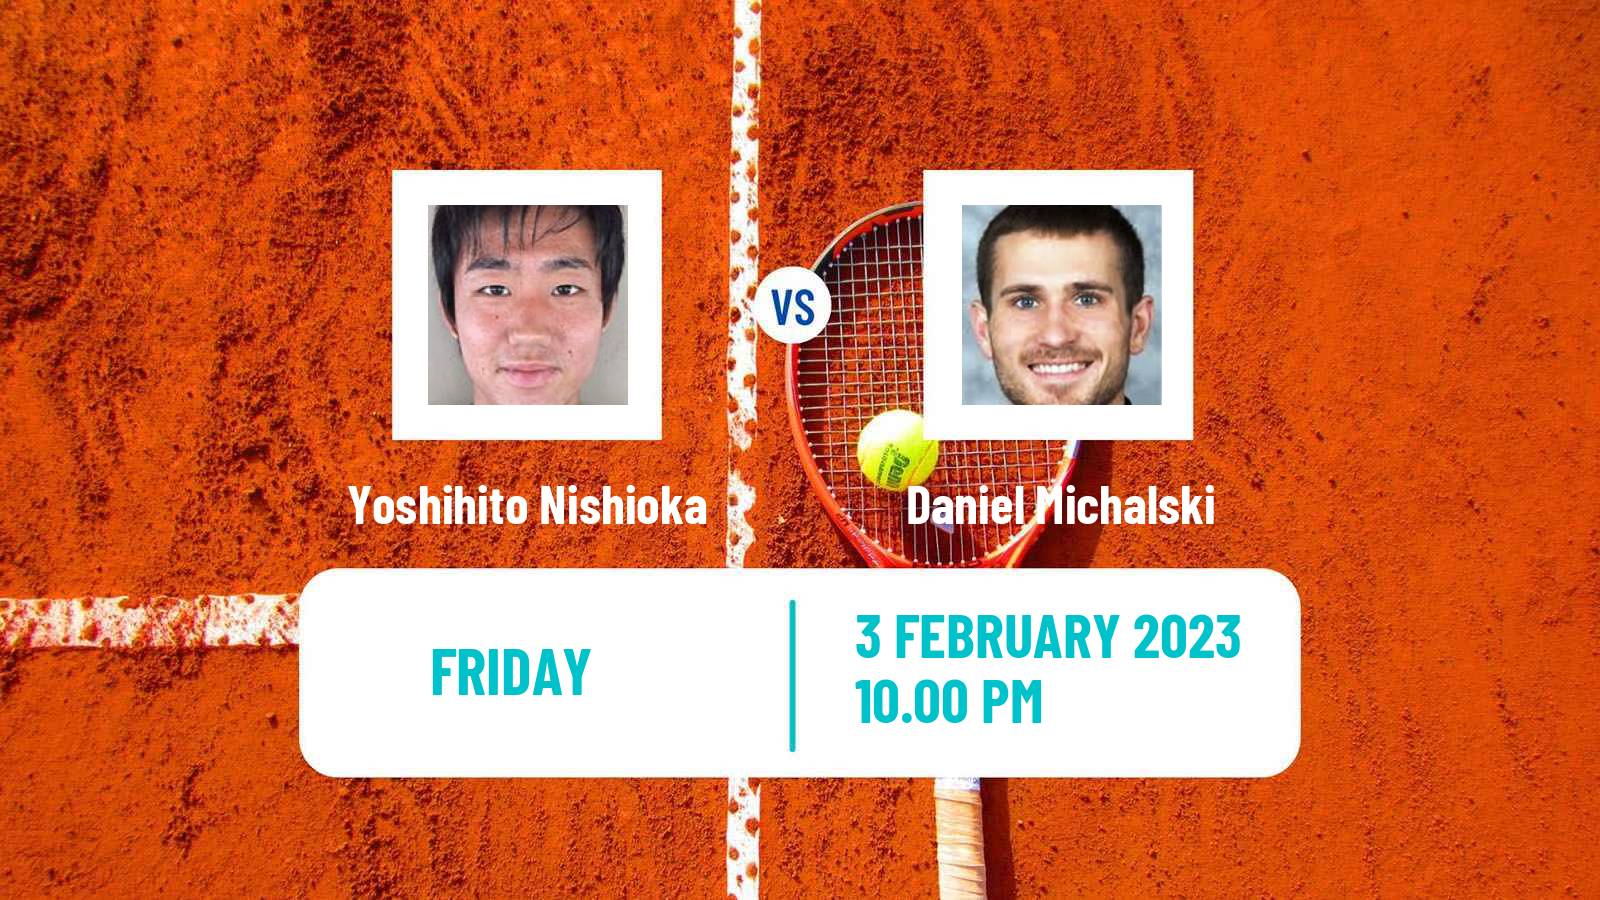 Tennis Davis Cup World Group I Yoshihito Nishioka - Daniel Michalski